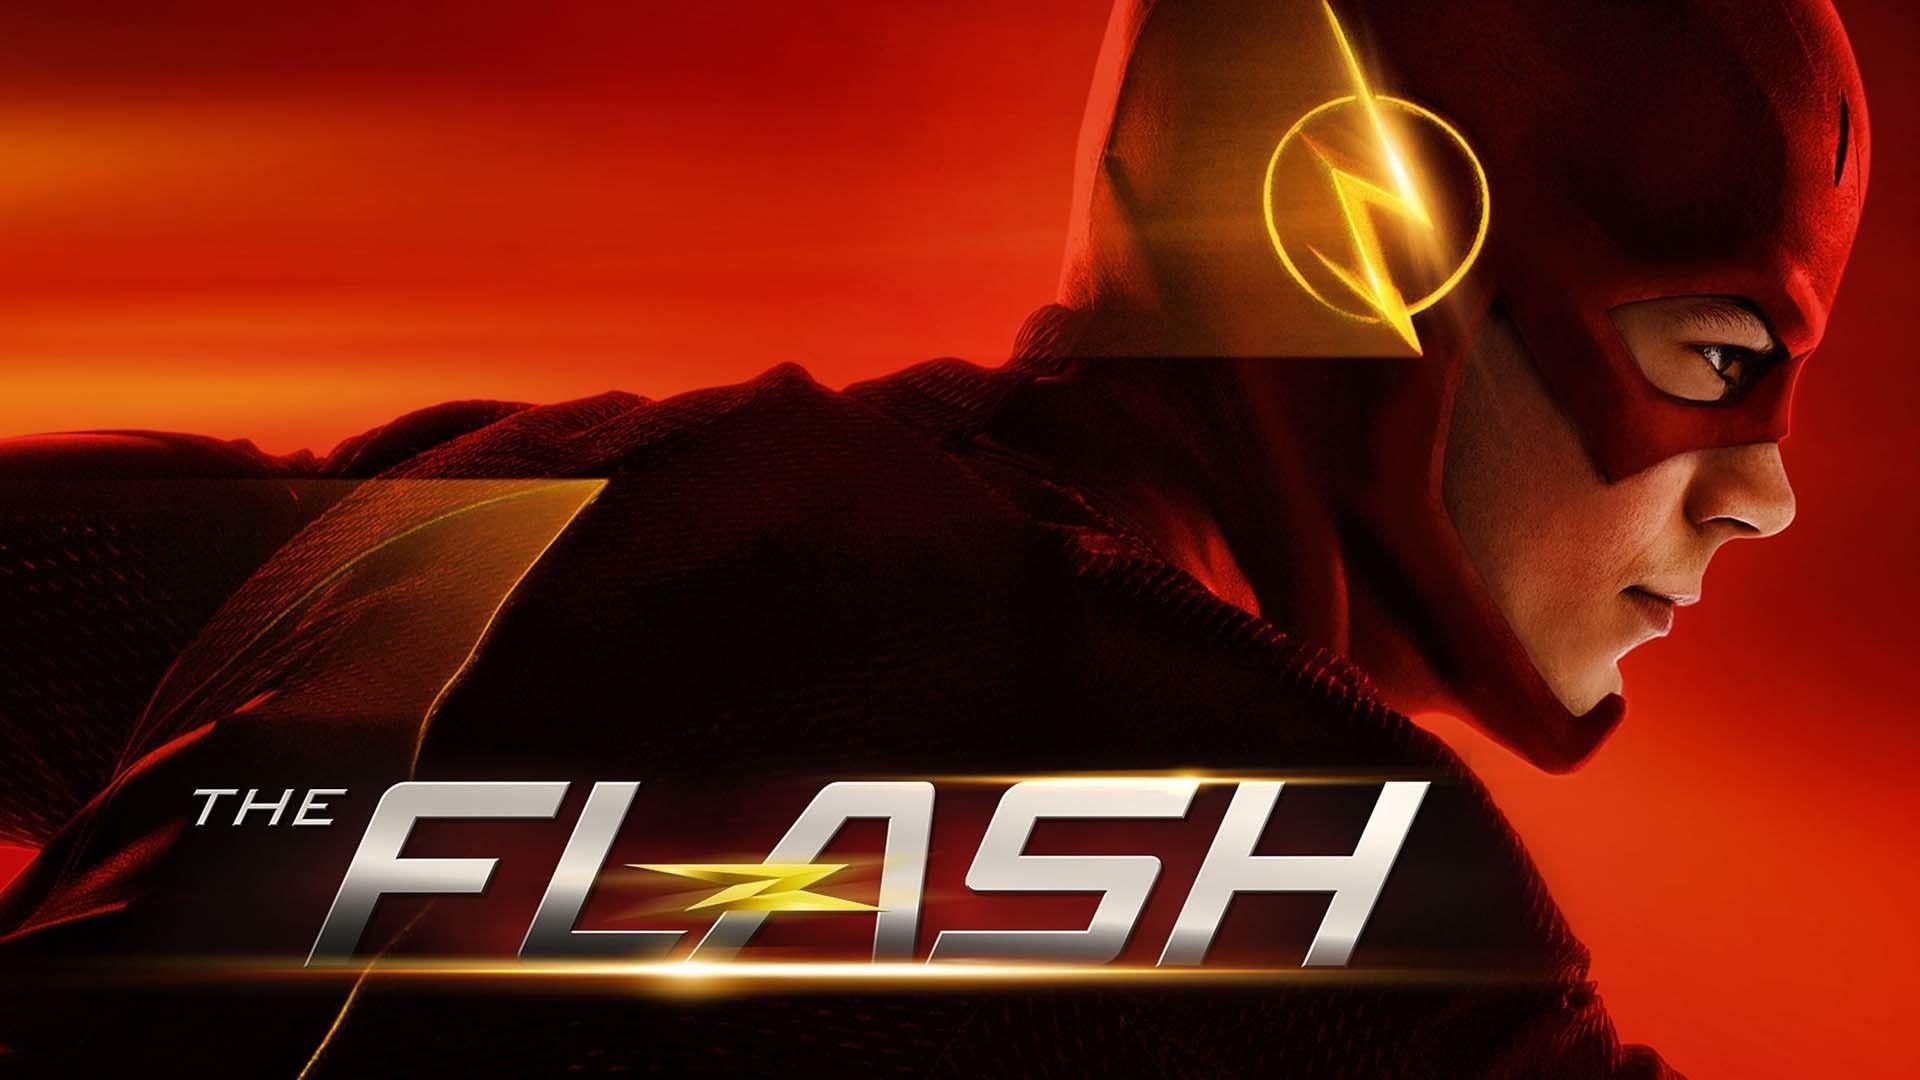 The Flash 2014 Wallpaper